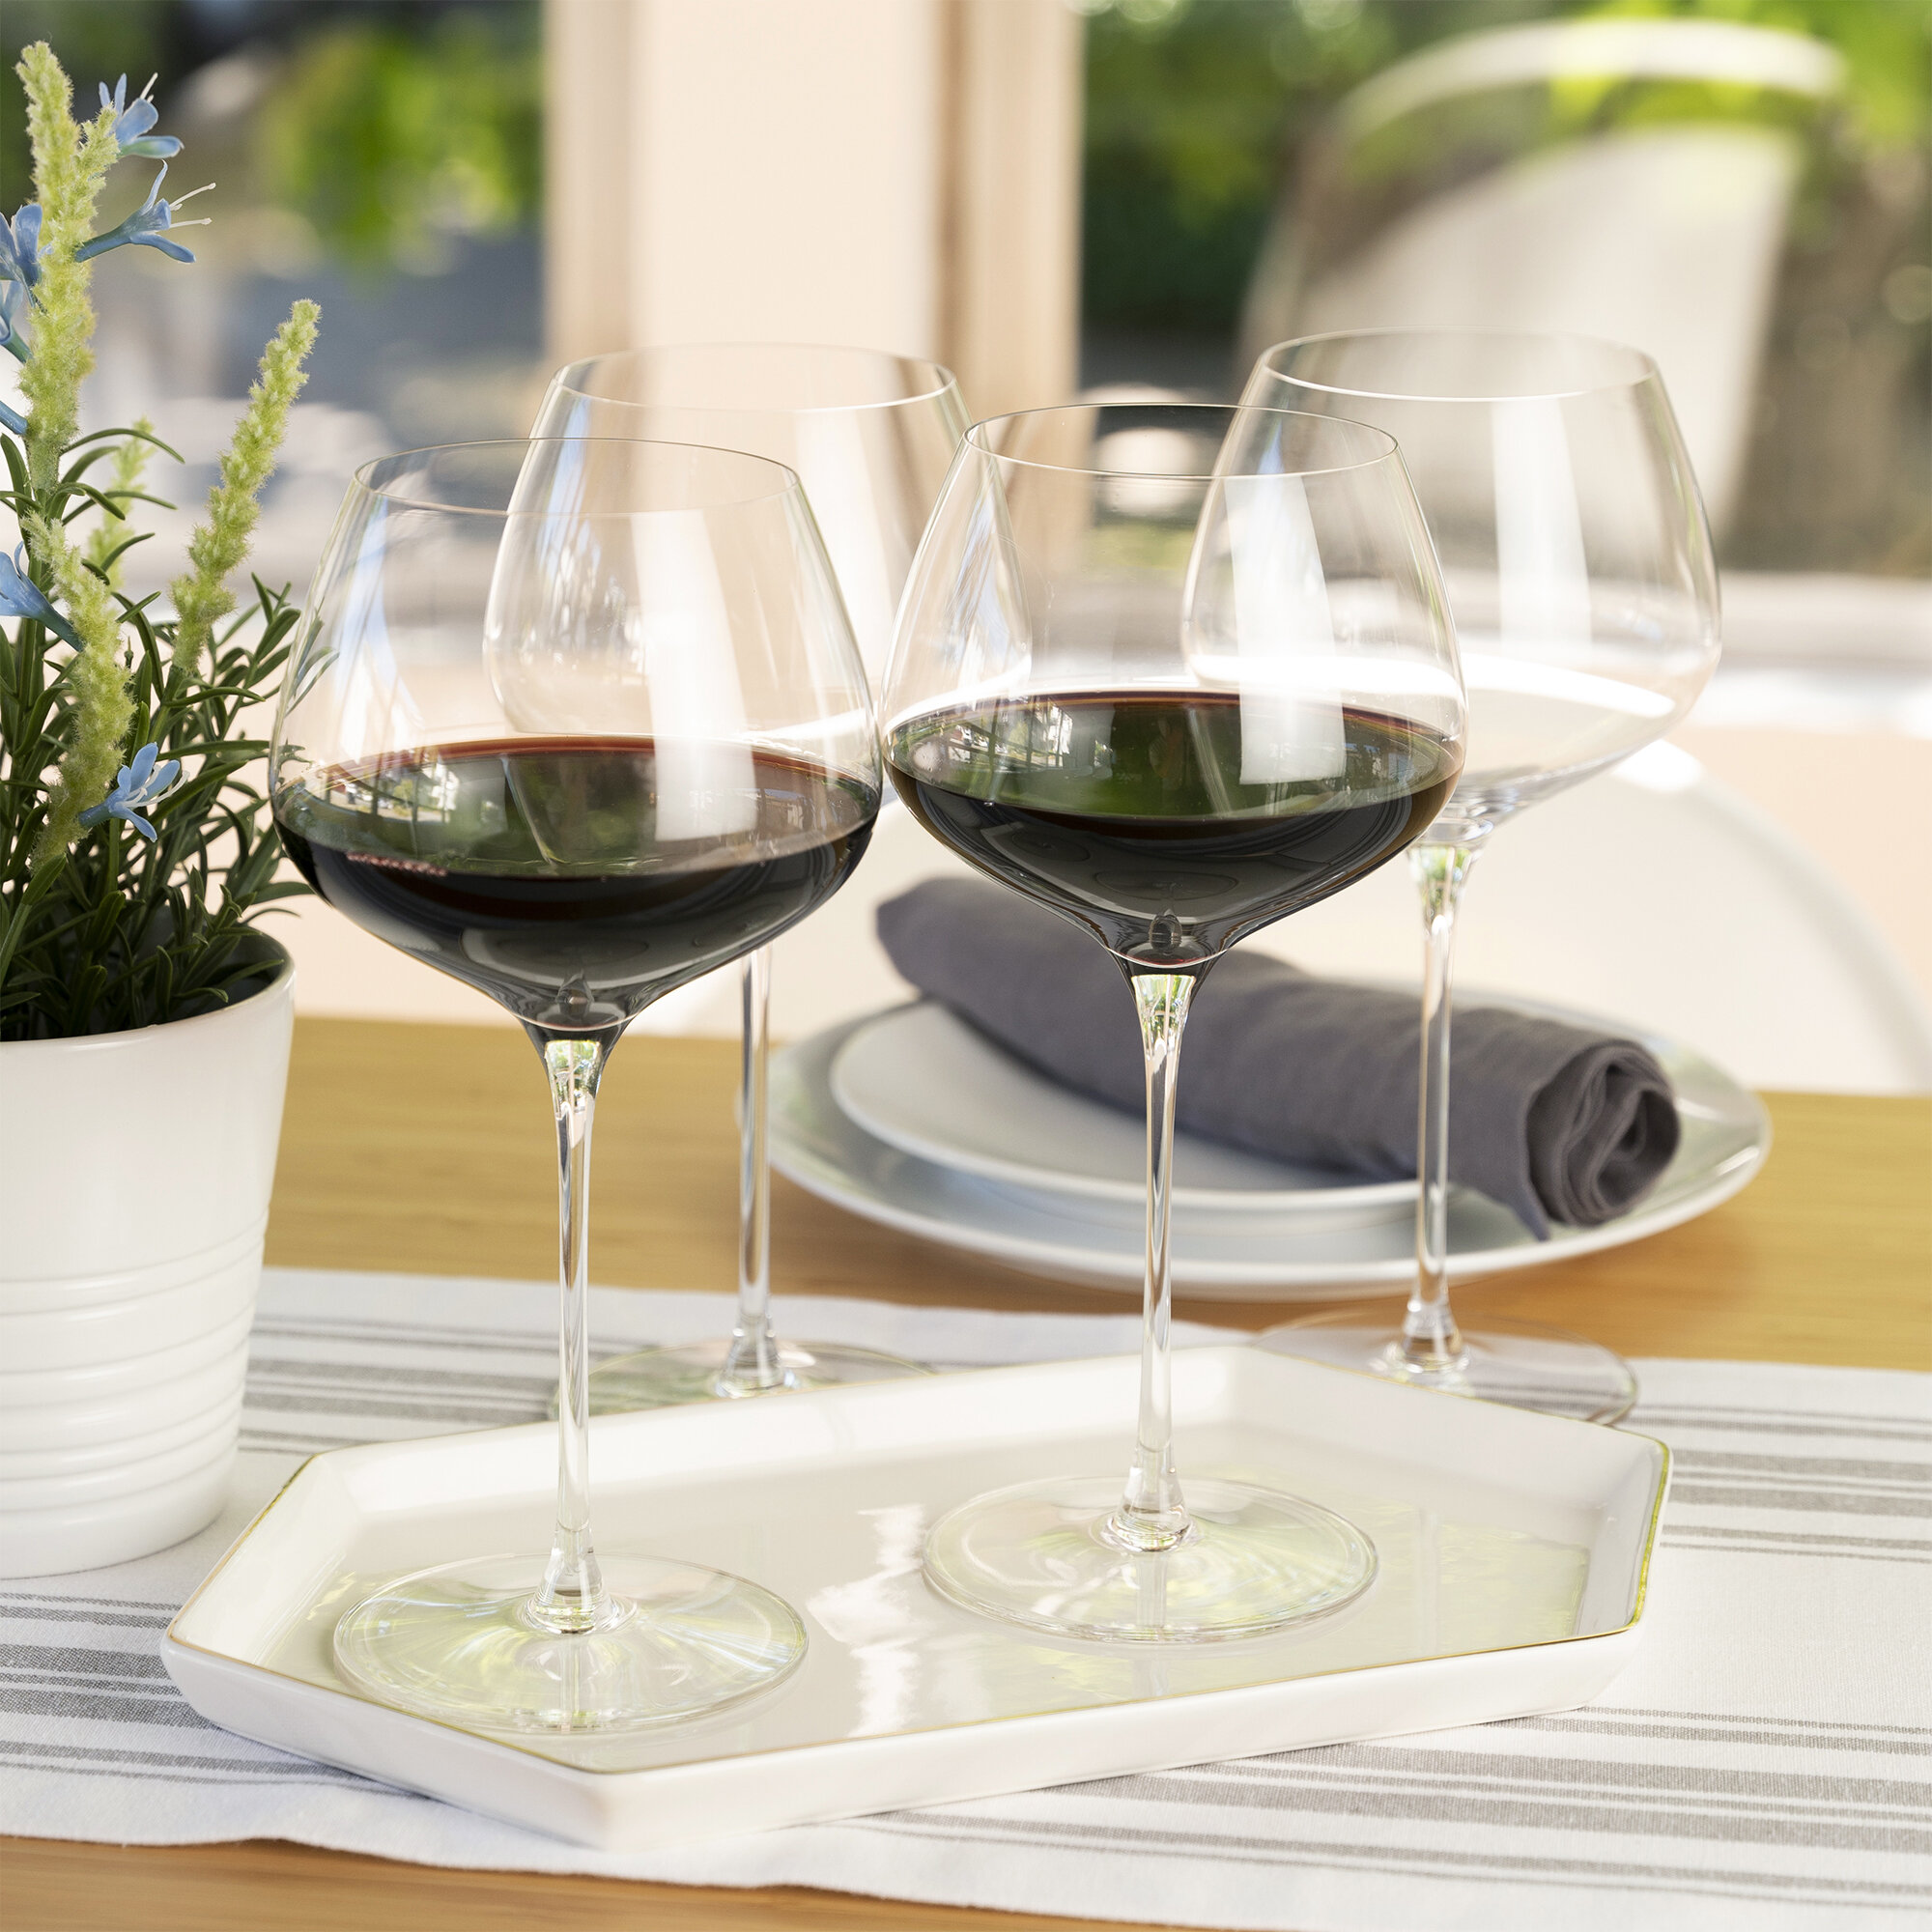 Spiegelau Red Wine Glasses (Set of 4)